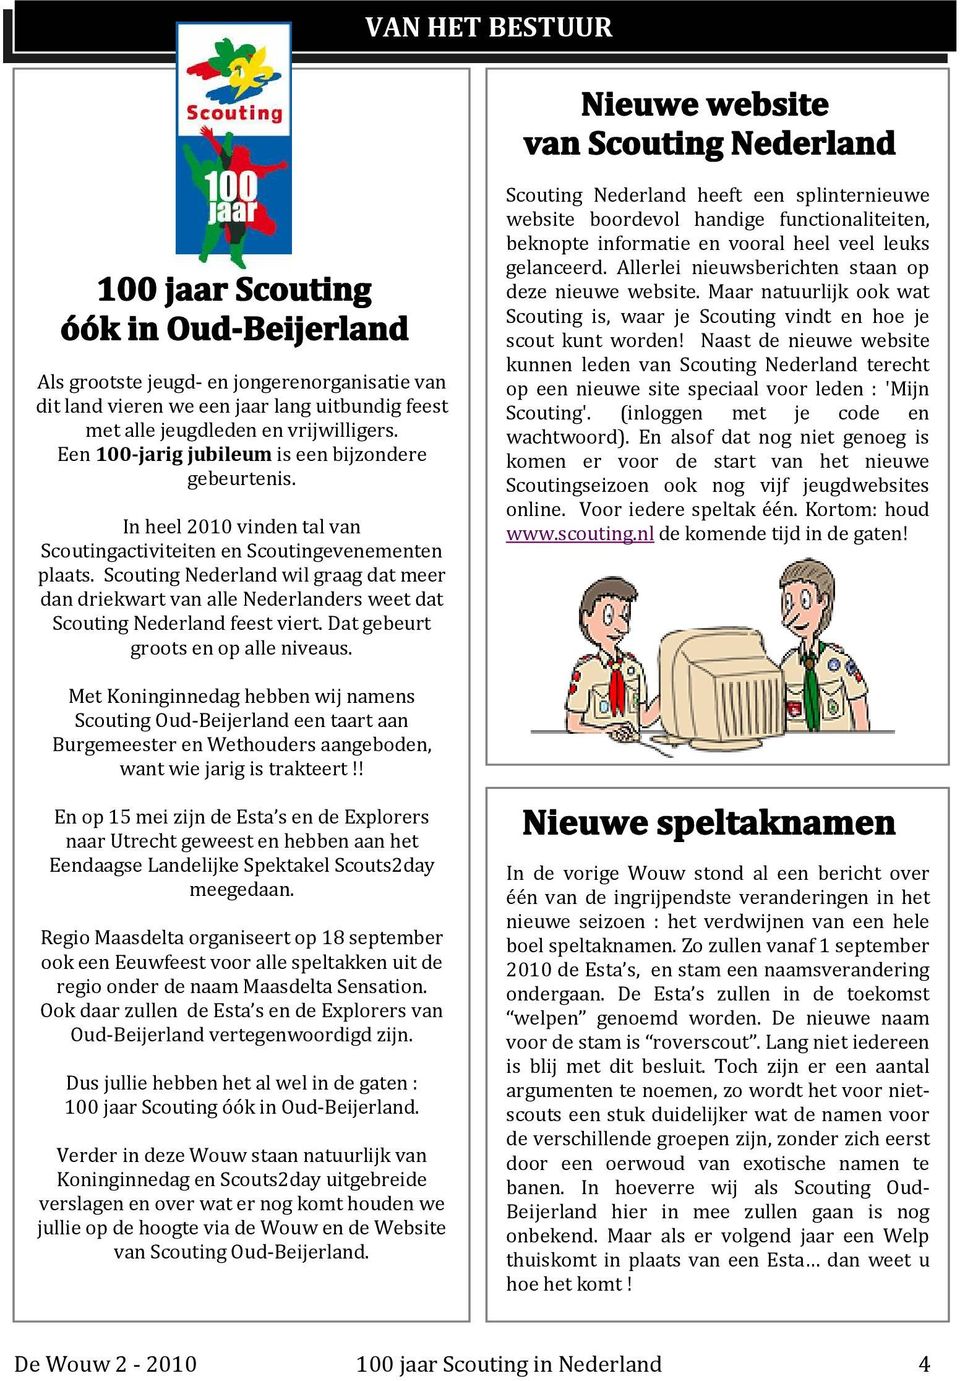 Scouting Nederland wil graag dat meer dan driekwart van alle Nederlanders weet dat Scouting Nederland feest viert. Dat gebeurt groots en op alle niveaus.